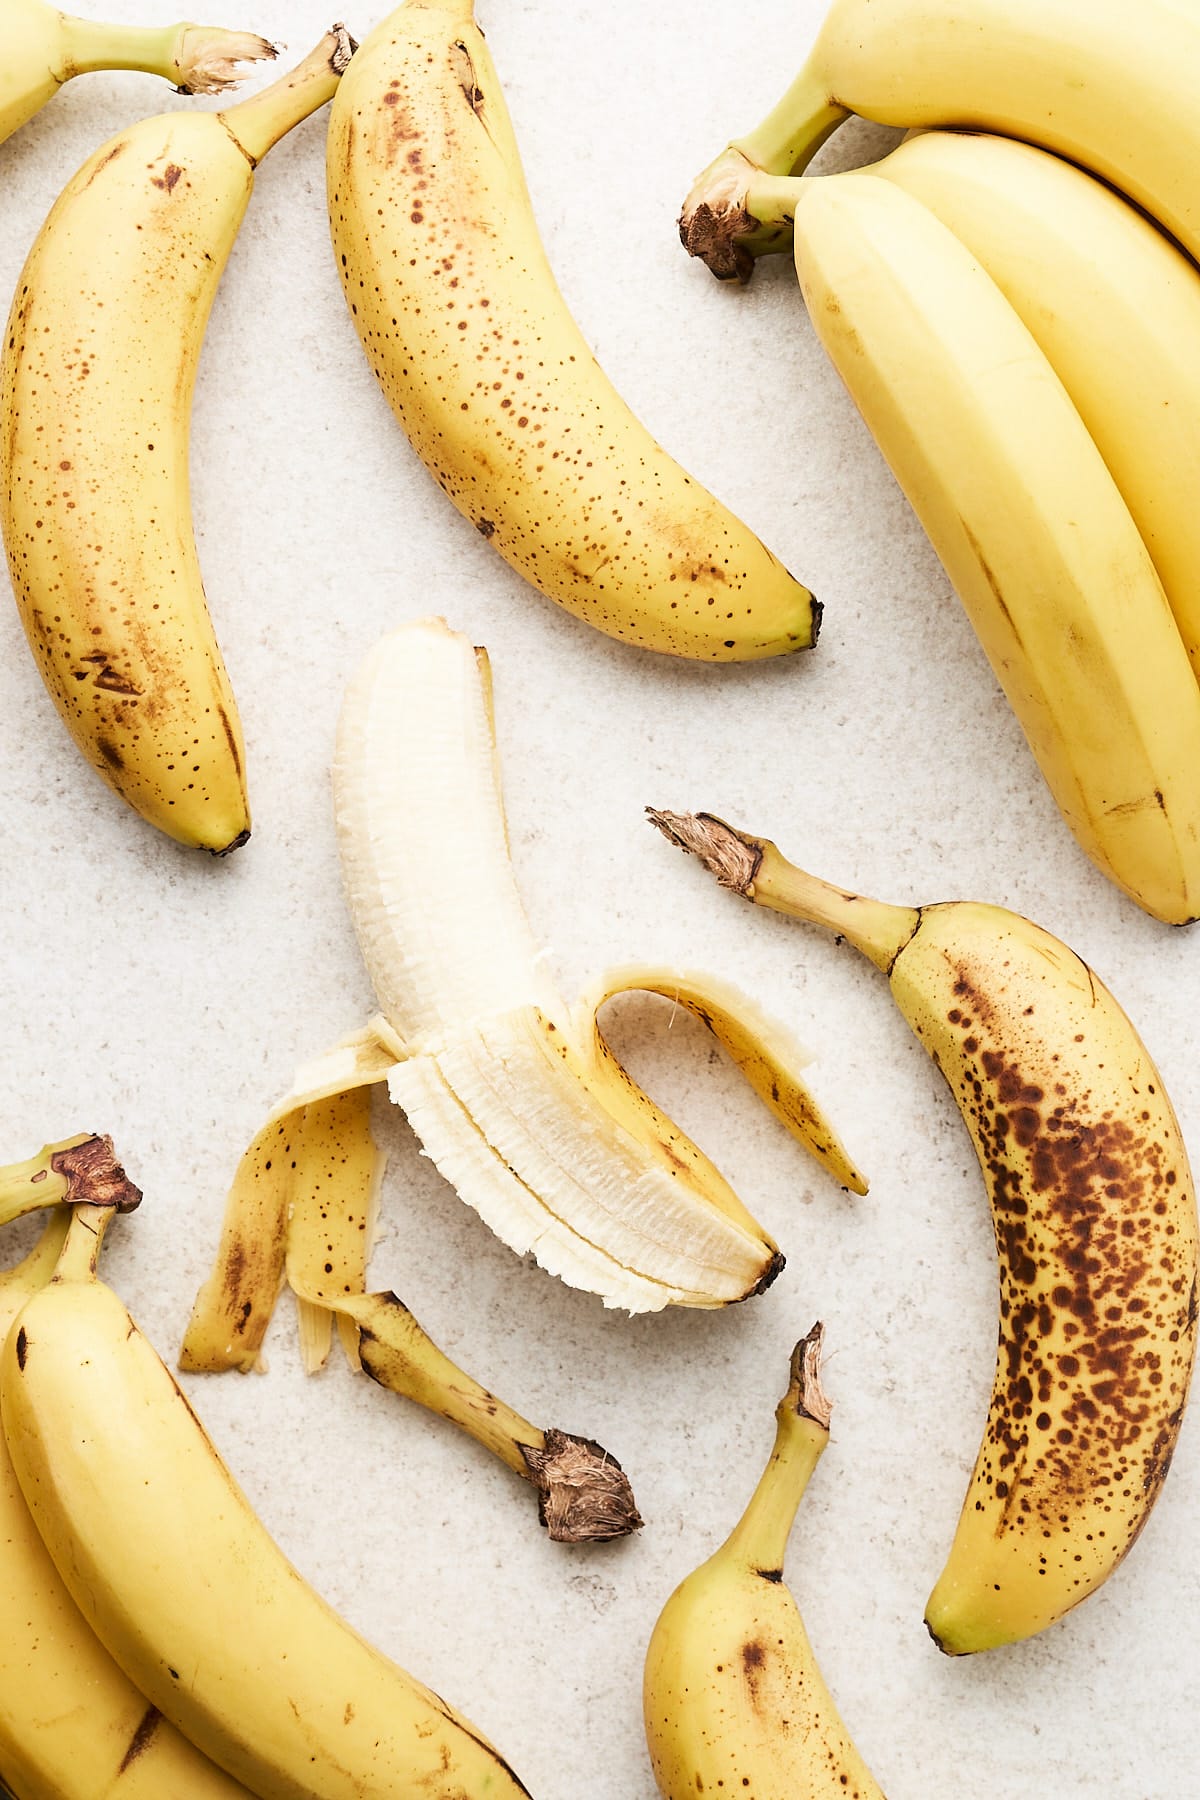 Peeled bananas on a counter.